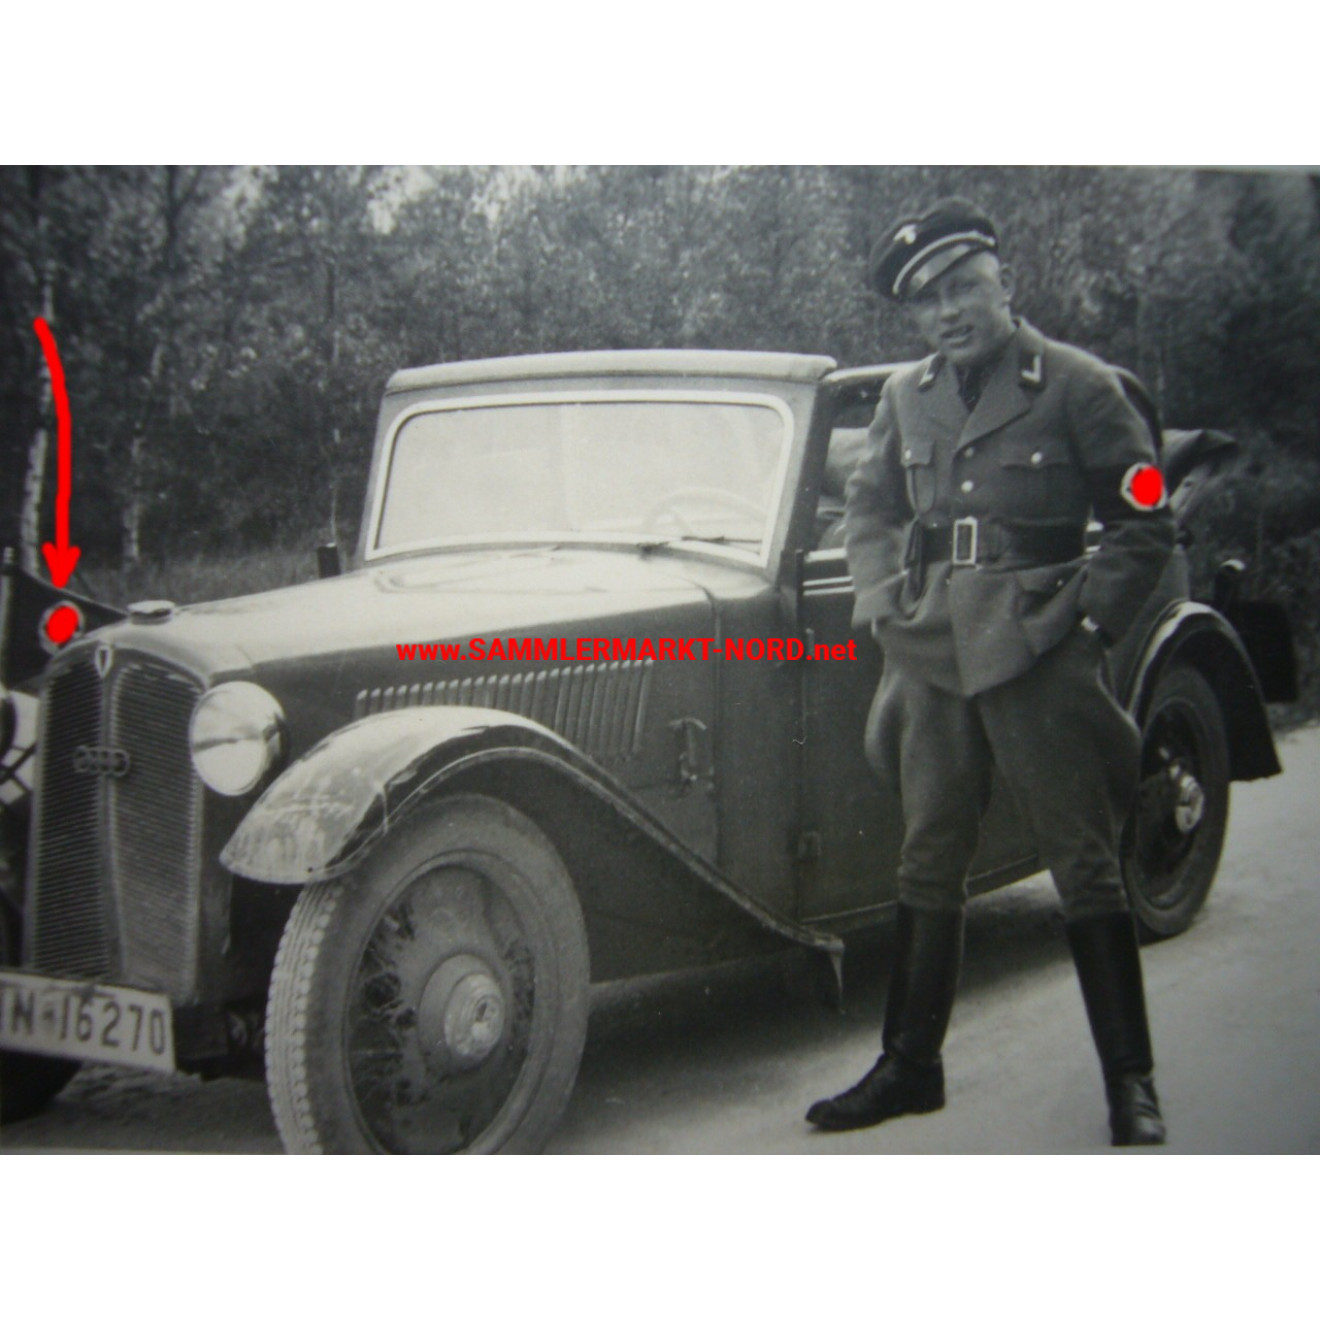 Car with swastika pennant & political leader NSDAP